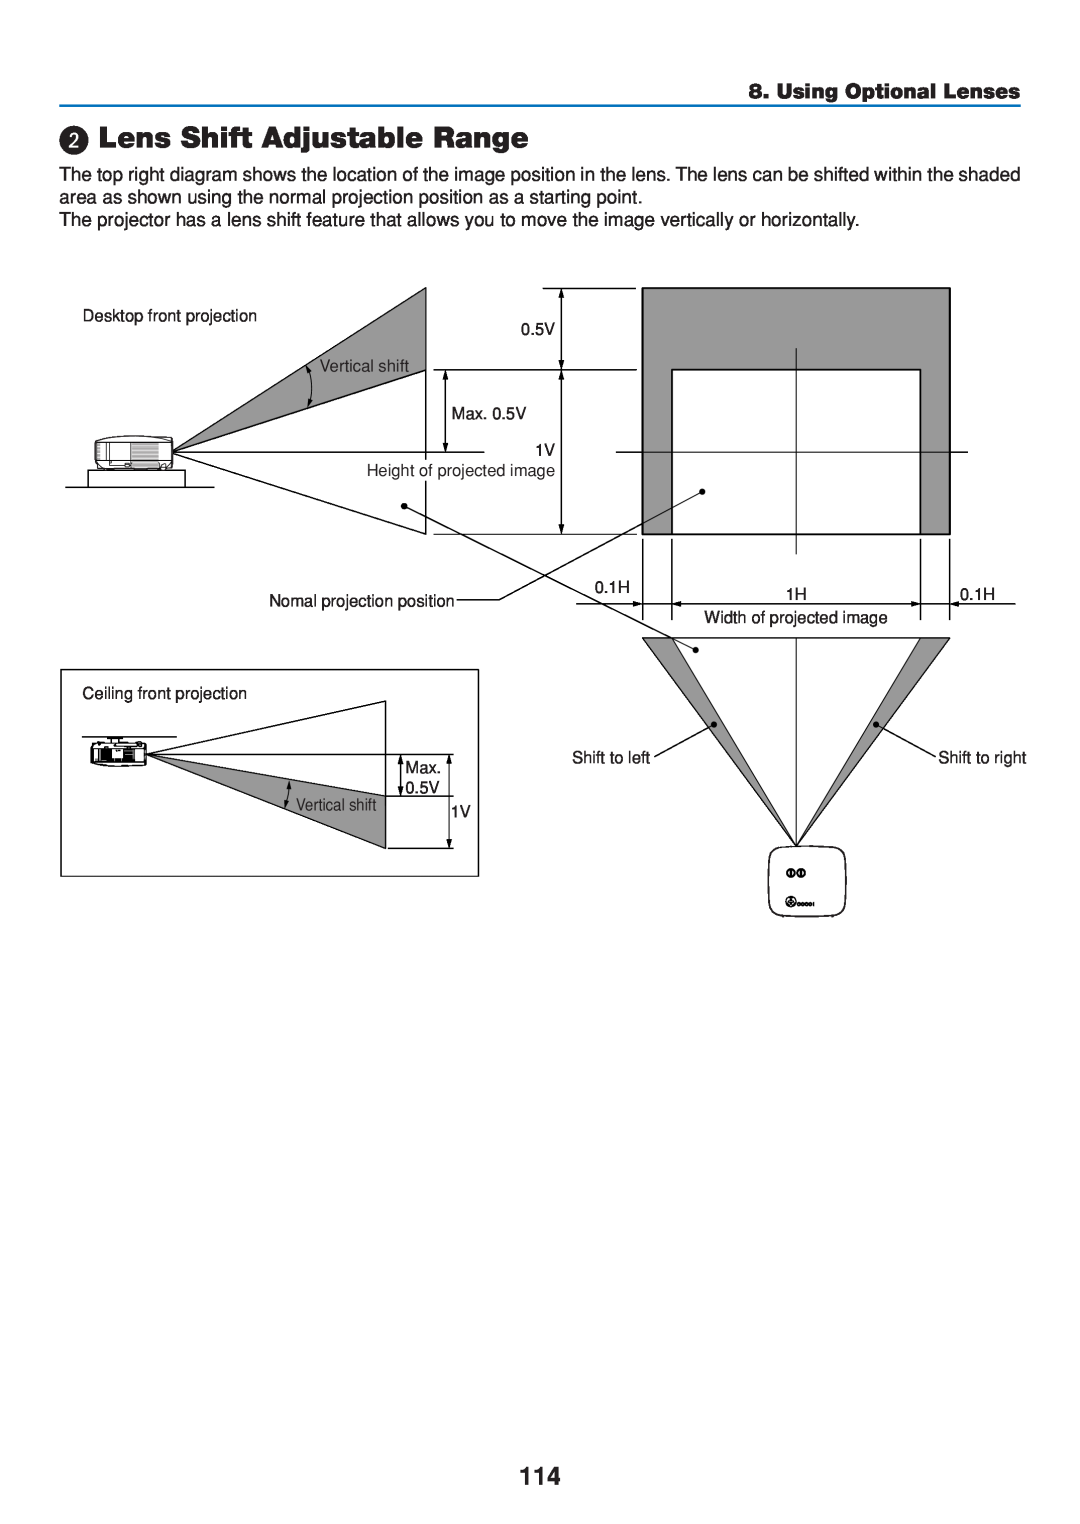 Dukane 8808 user manual Lens Shift Adjustable Range, Using Optional Lenses 